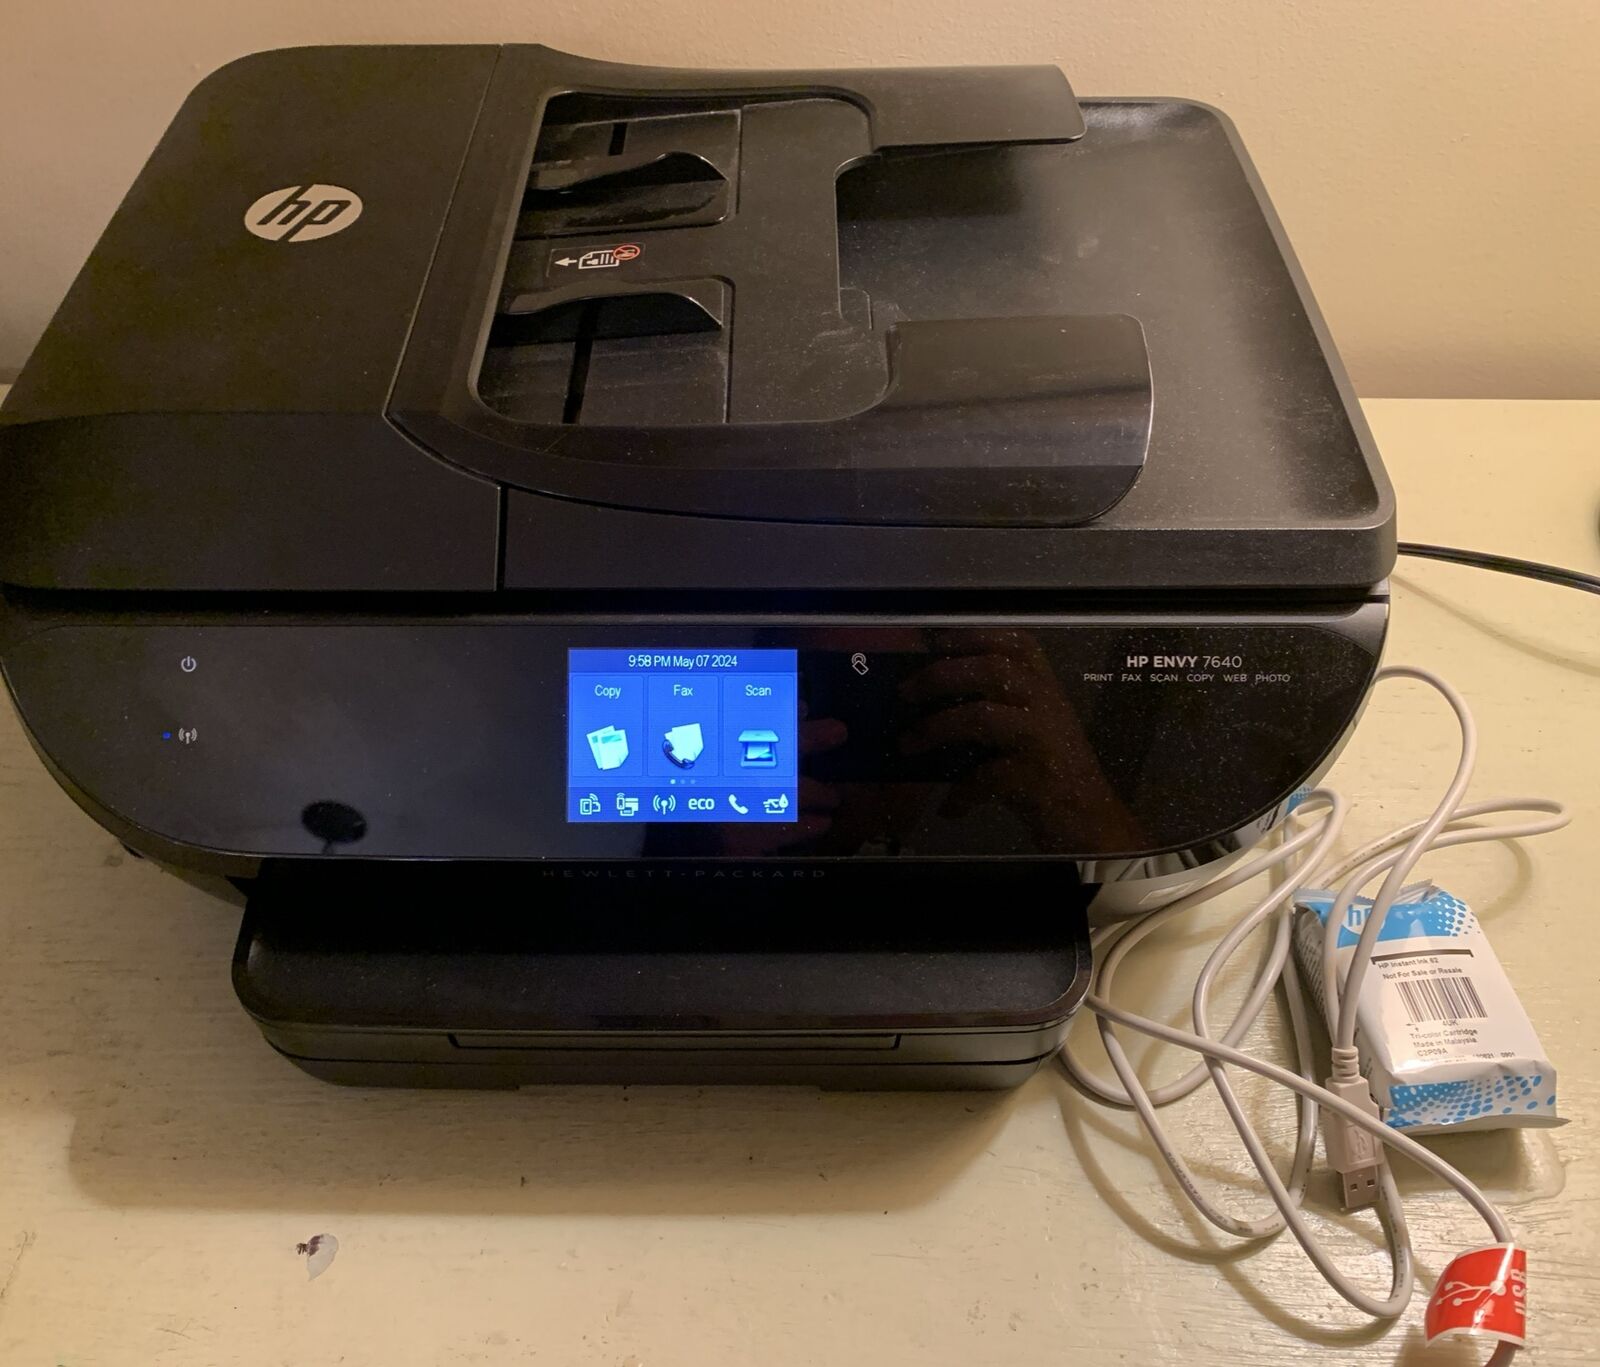 HP Envy 7640 Multifunction Photo Printer Pre Owned Works